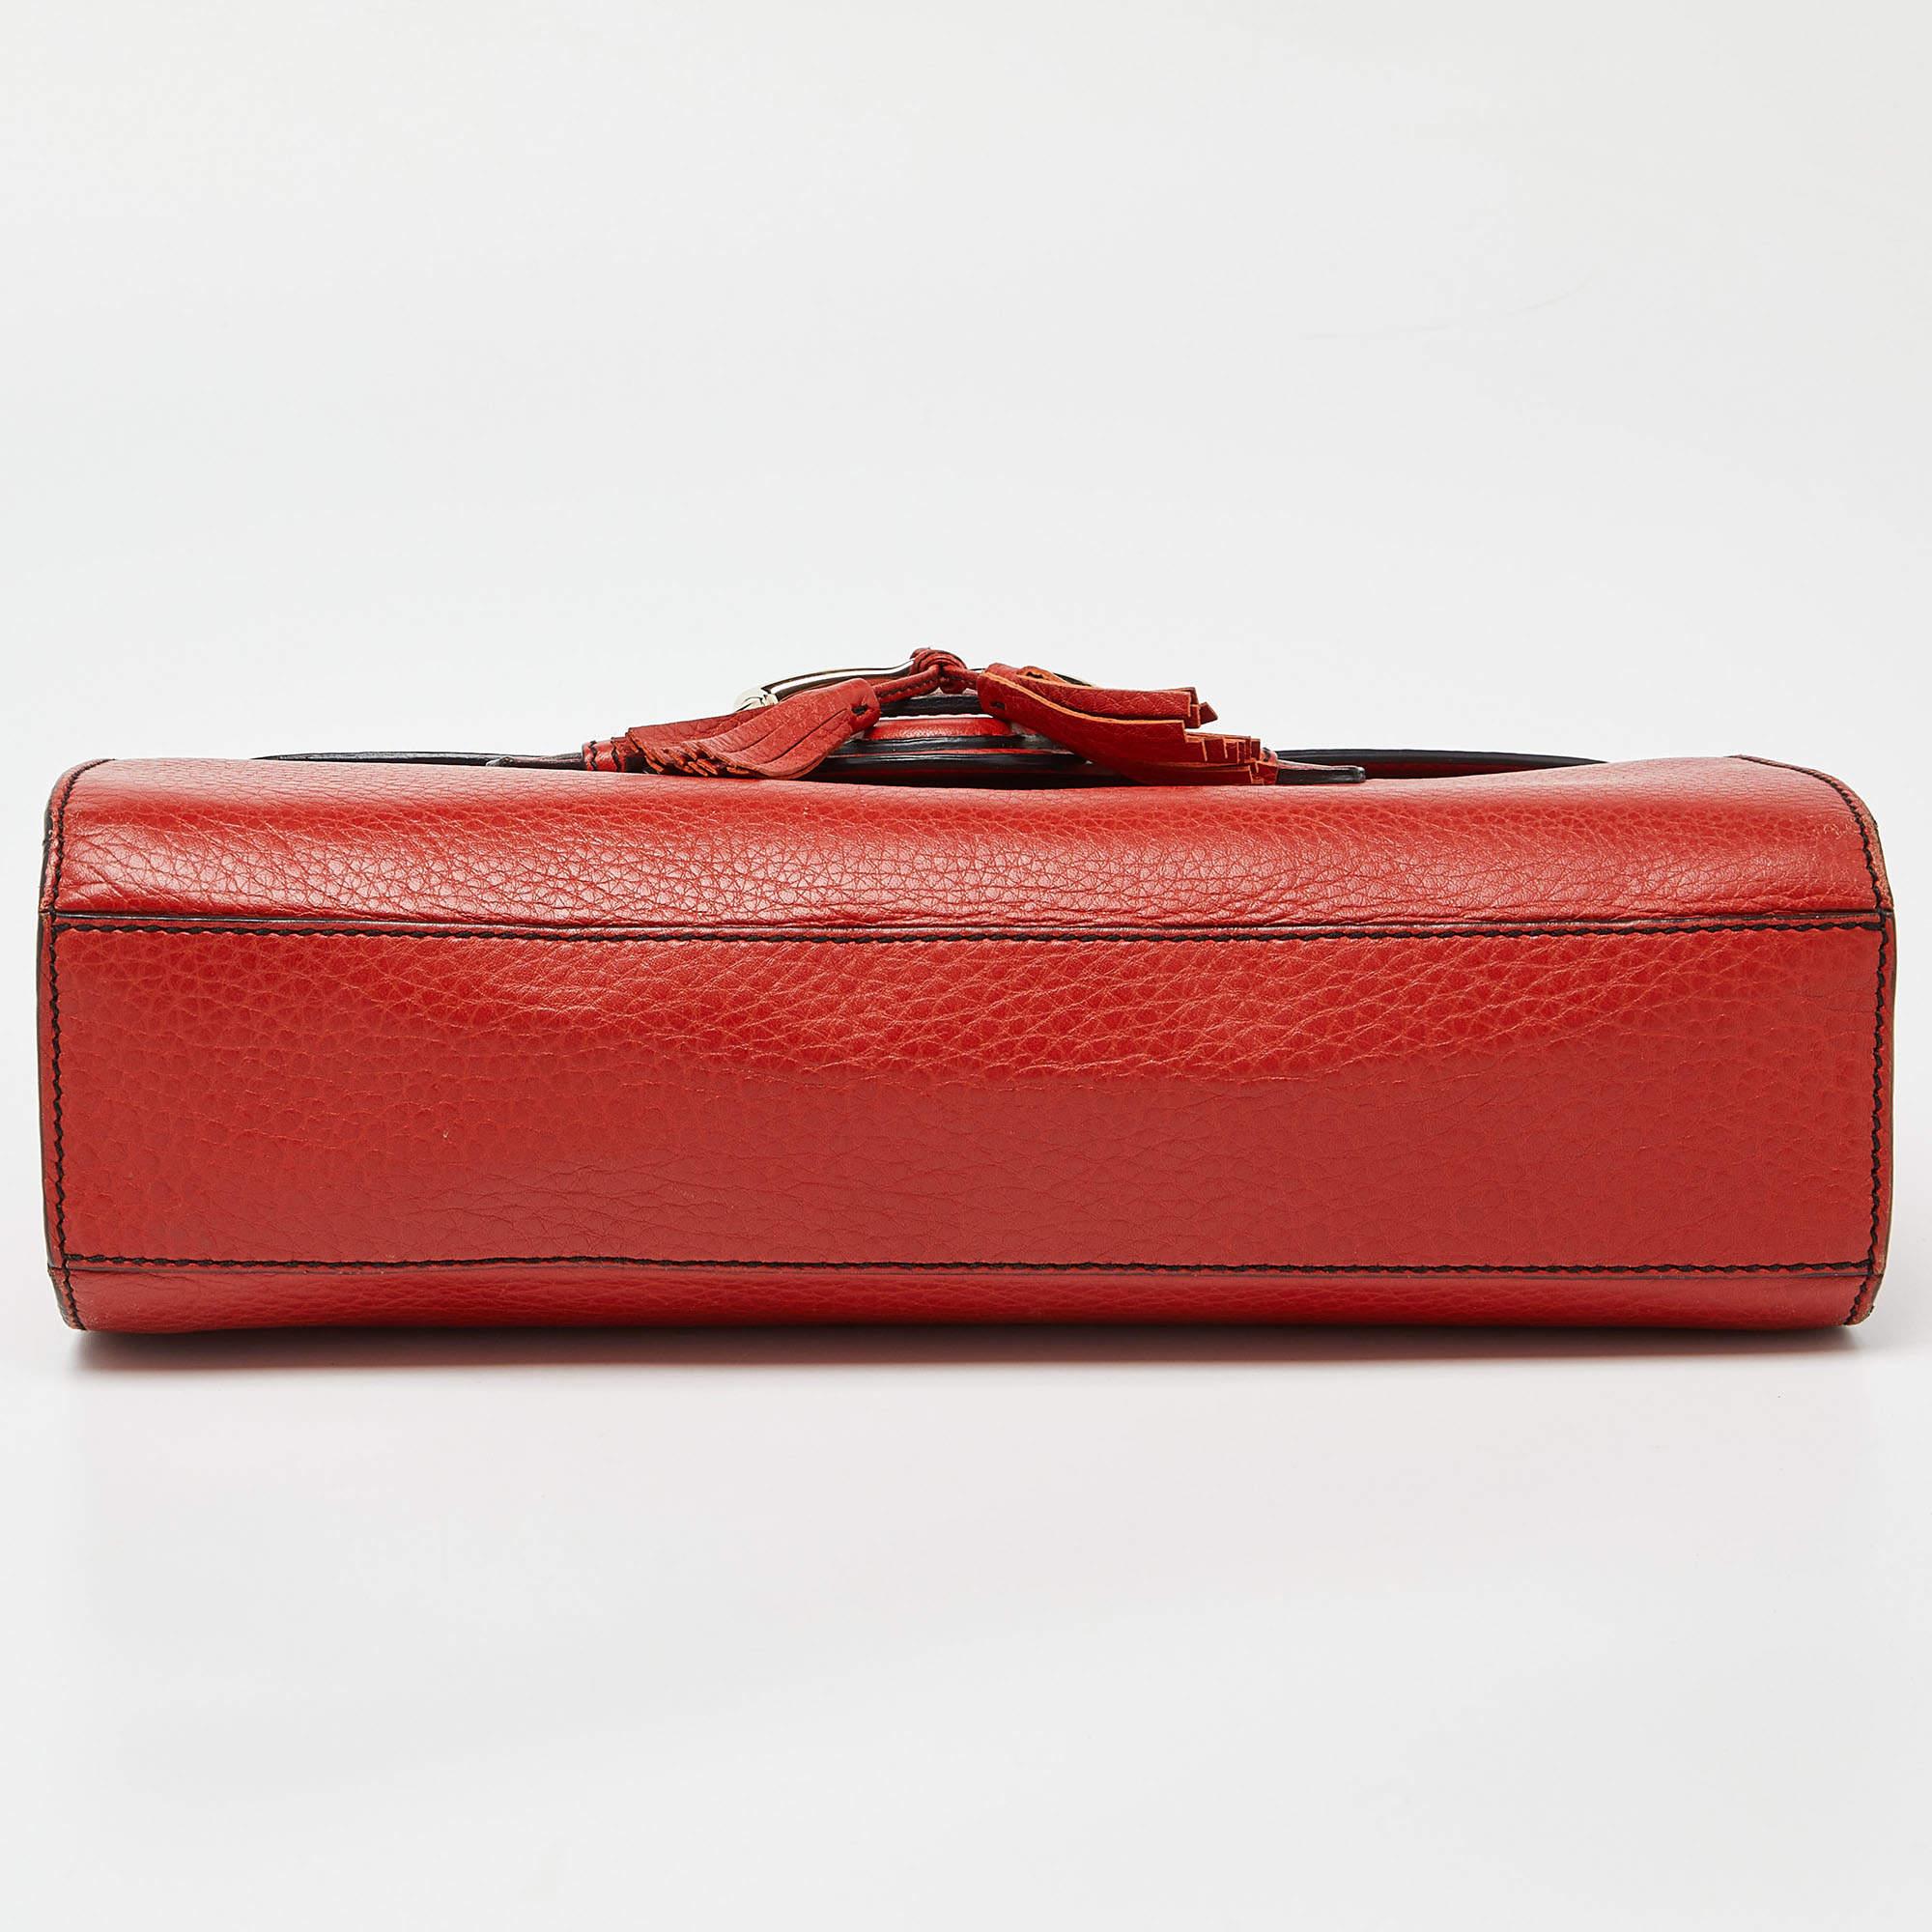 Gucci Coral Red Leather Medium Emily Shoulder Bag For Sale 6